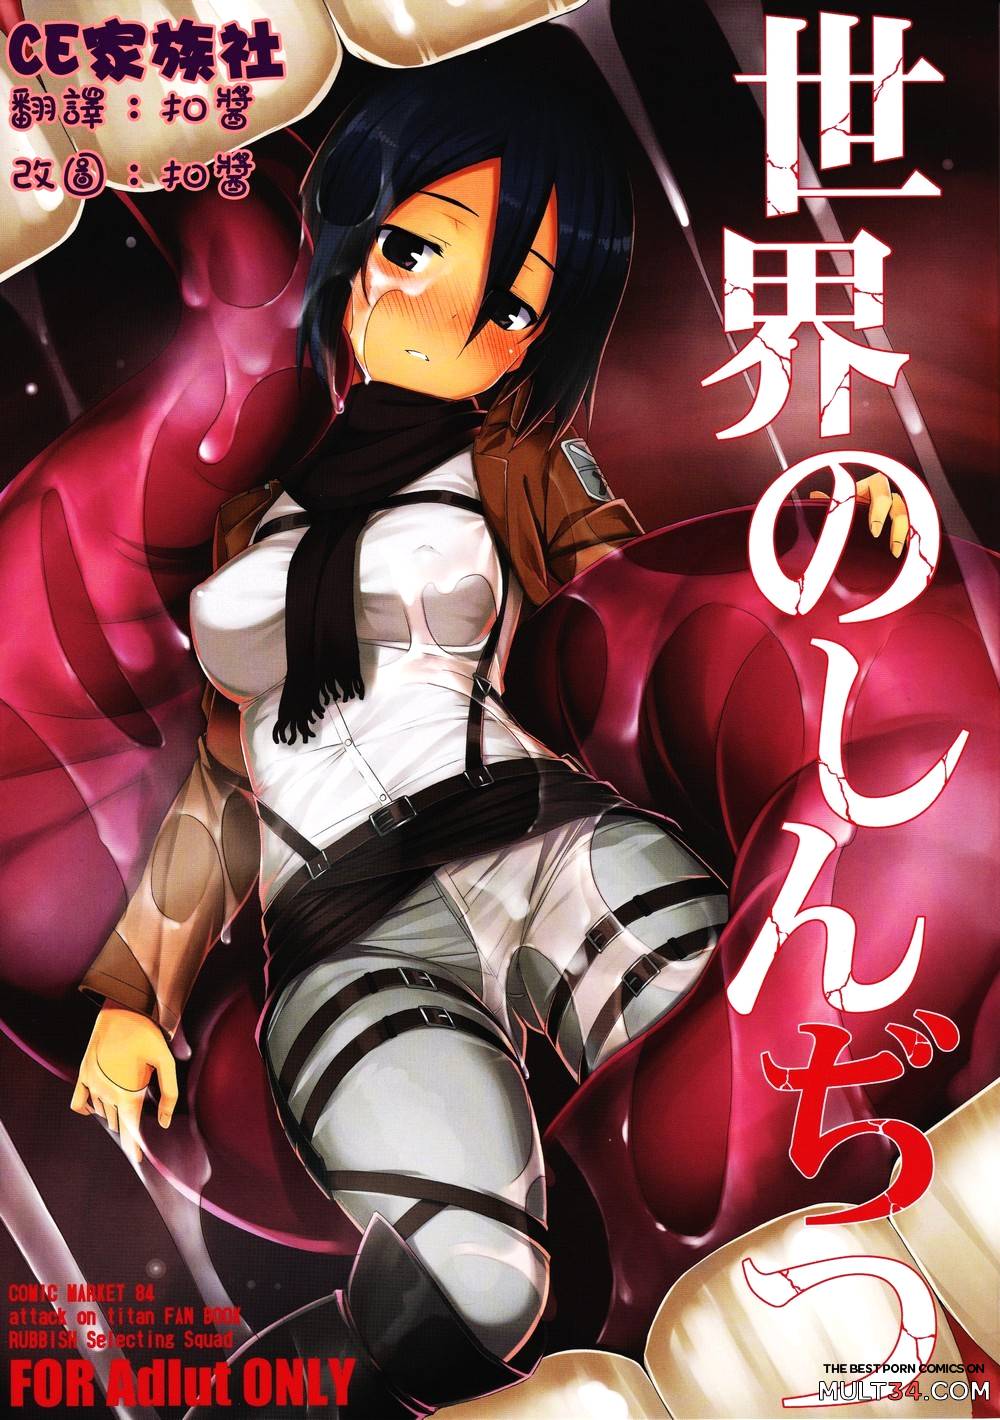 Kaku Ce Xxx - Porn comics with Mikasa Ackerman, the best collection of porn comics